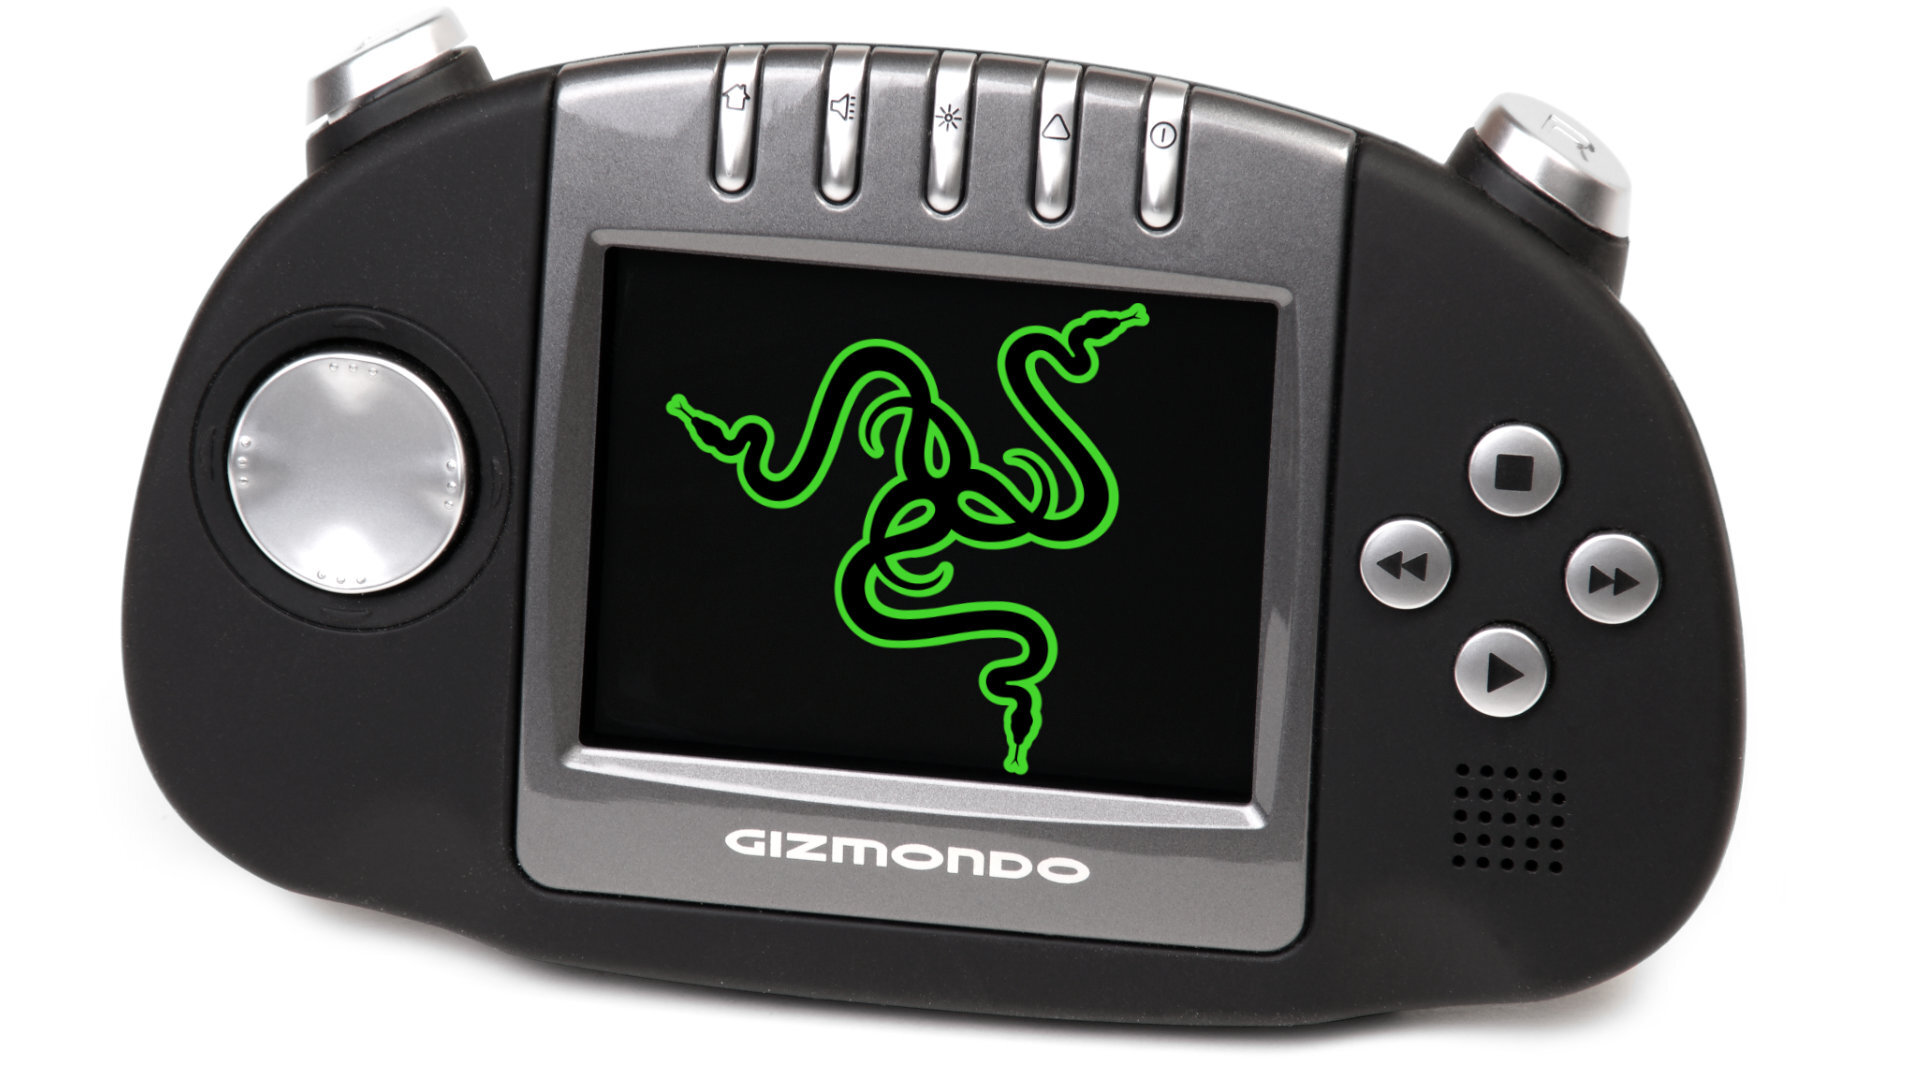 Razer and Qualcomm's handheld looks like a Wii U and Gizmondo hybrid